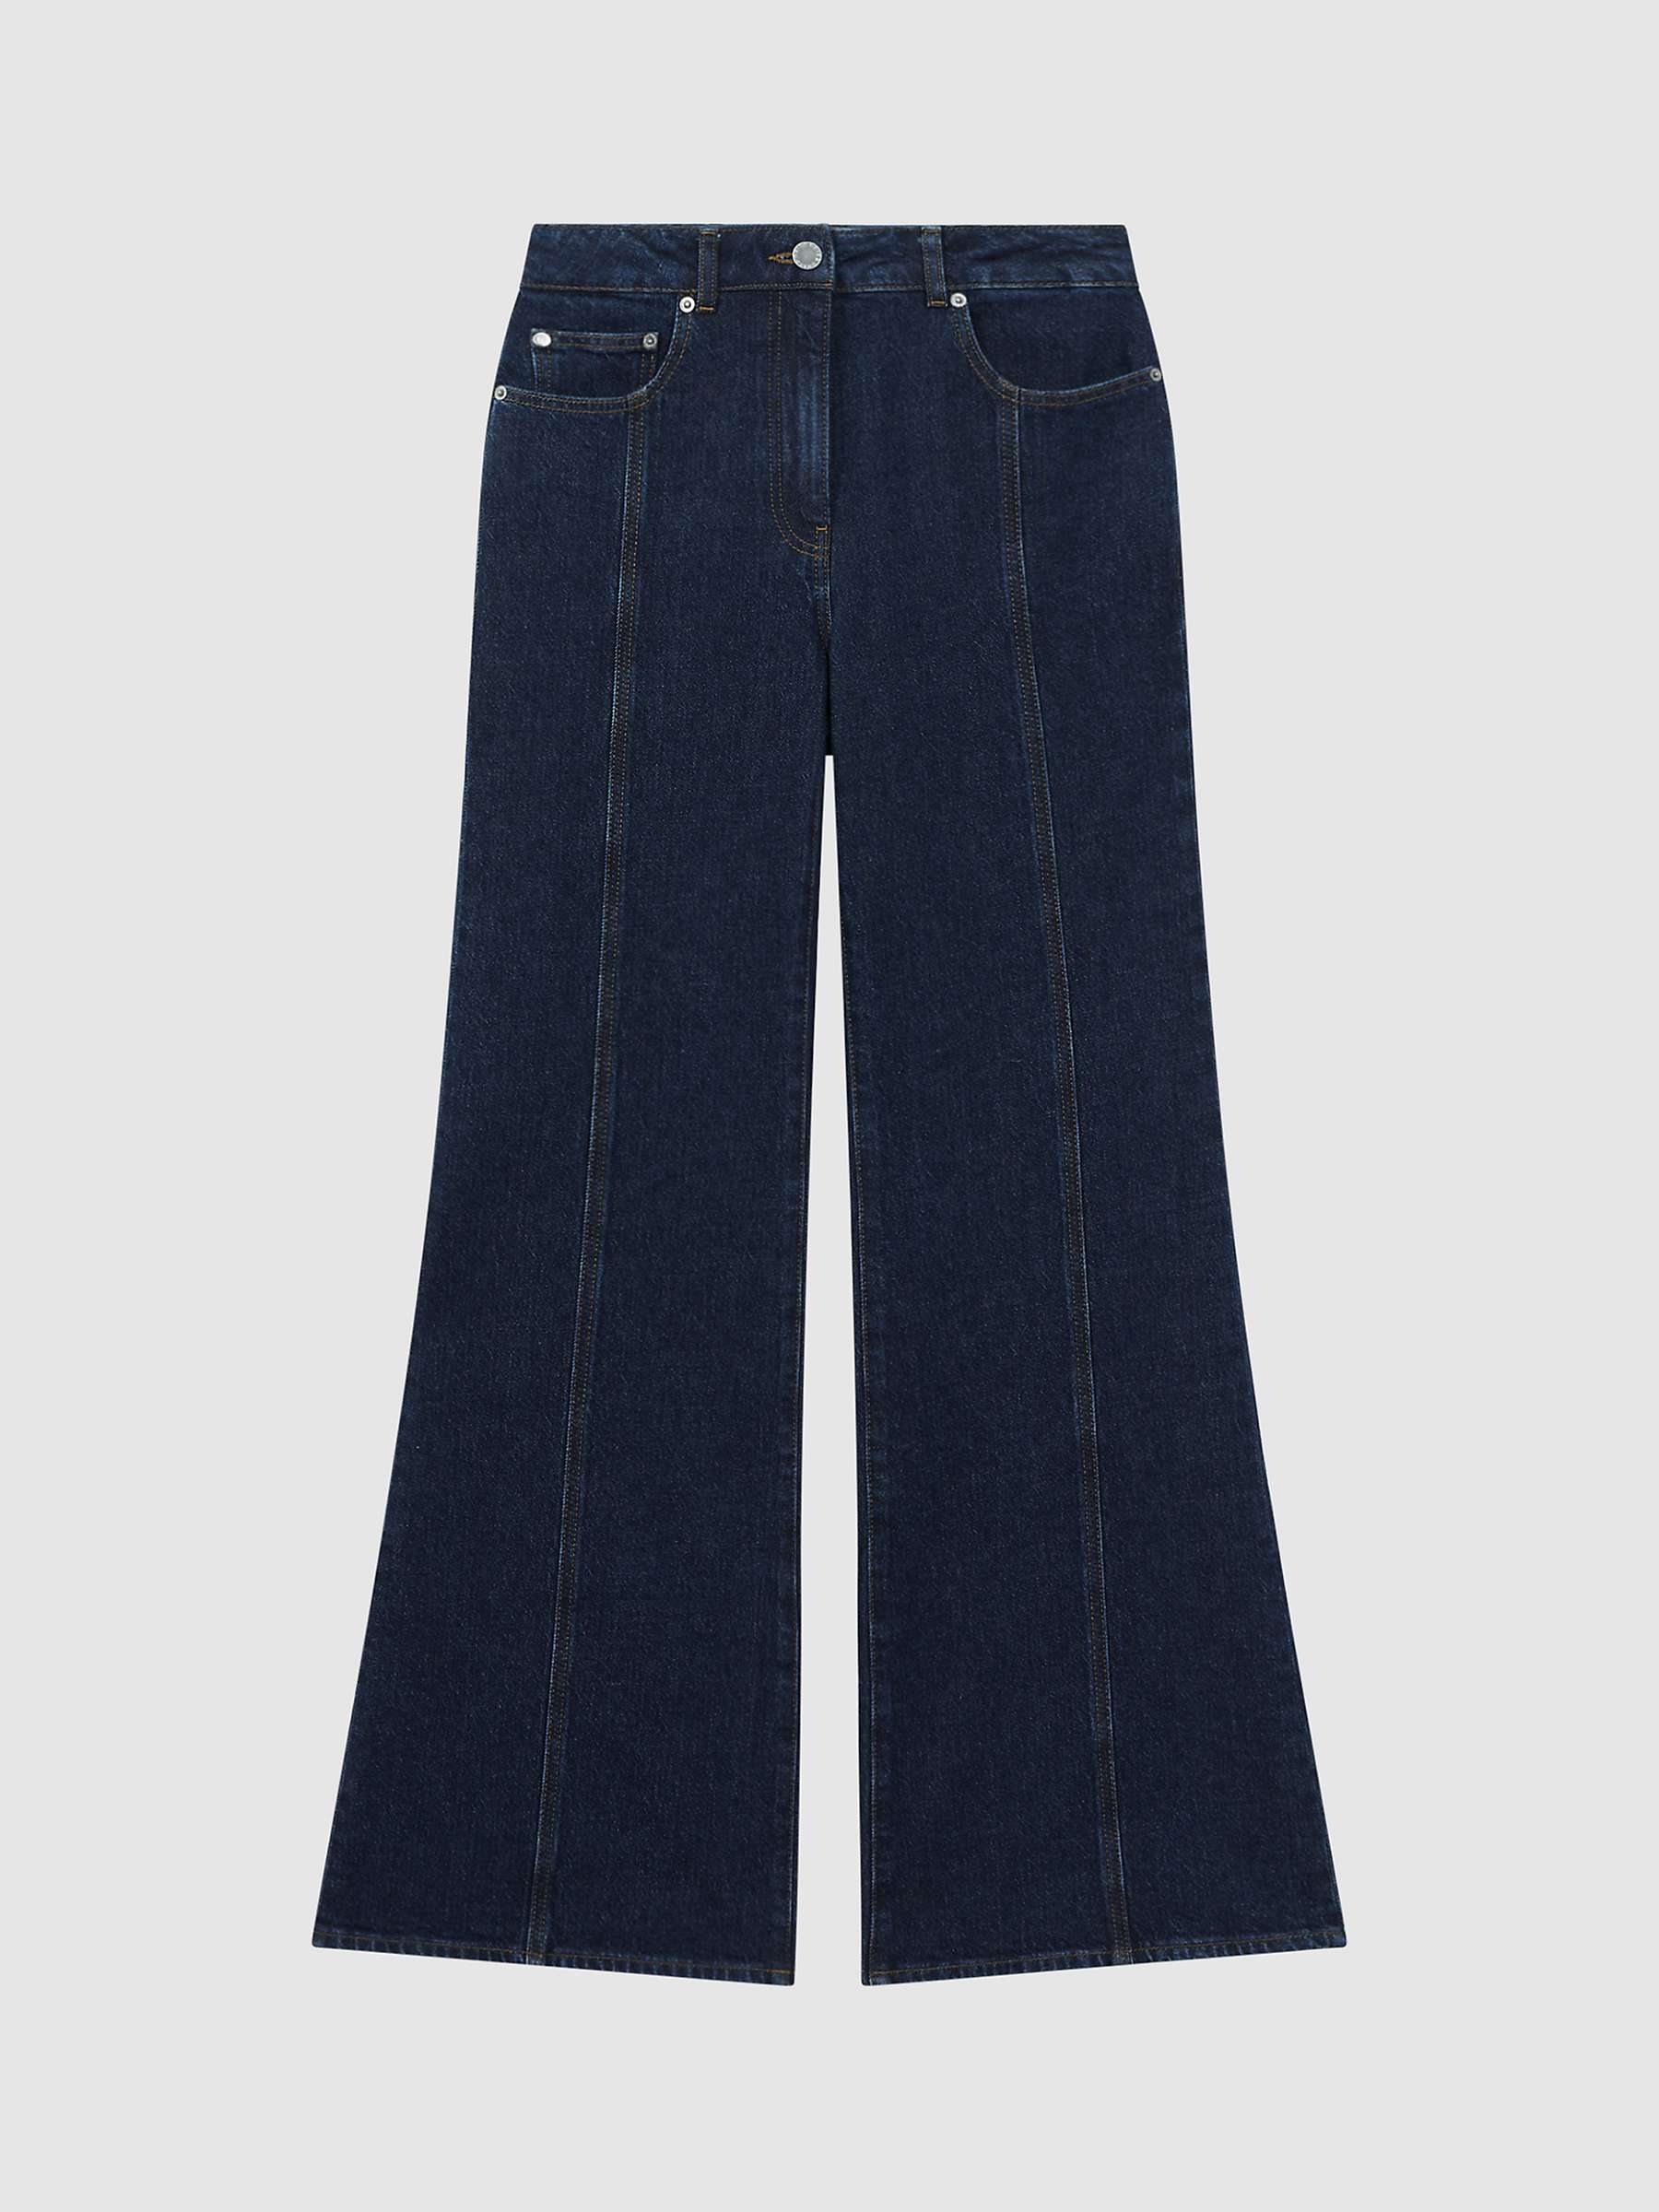 Buy Reiss Juniper Flared Jeans Online at johnlewis.com